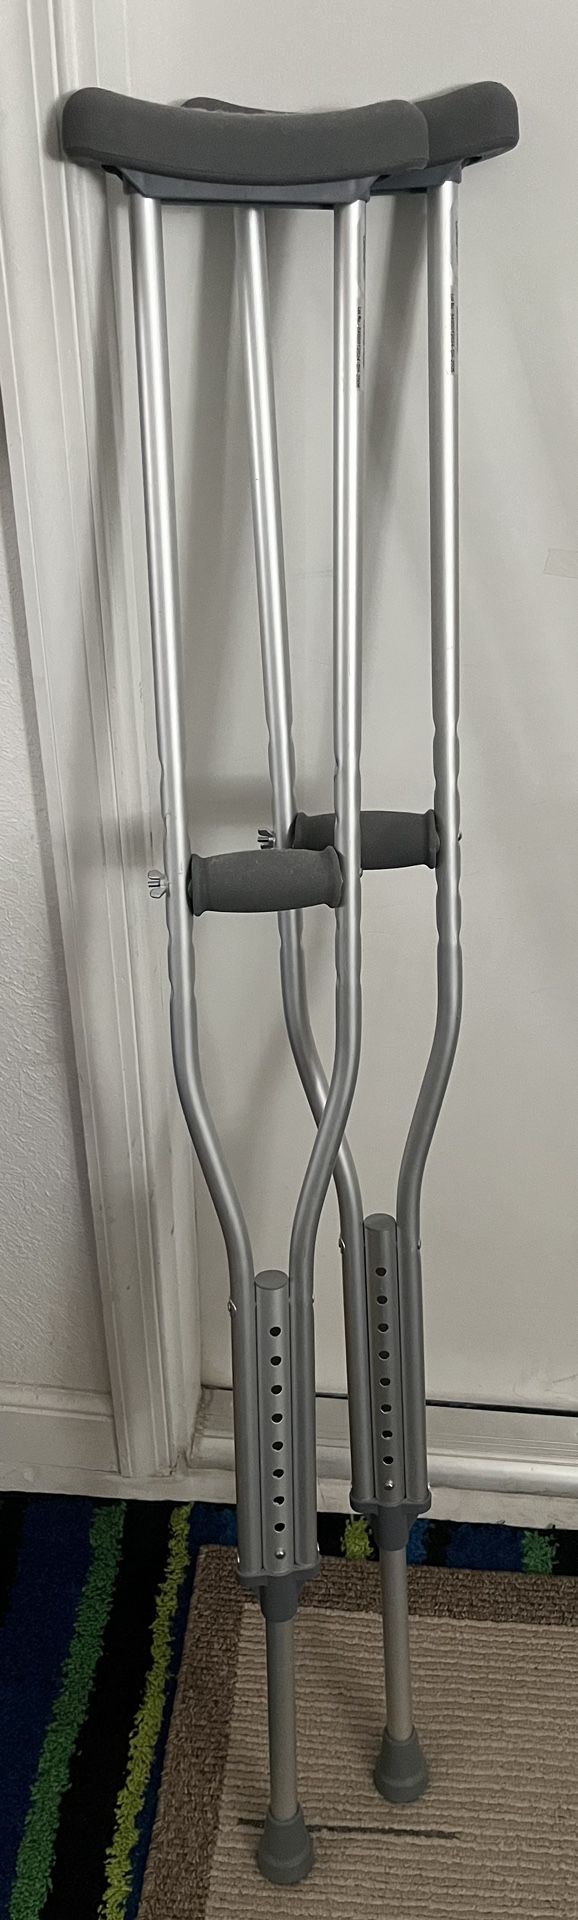 Crutches Aluminum by Cardinal Health-LNEW!